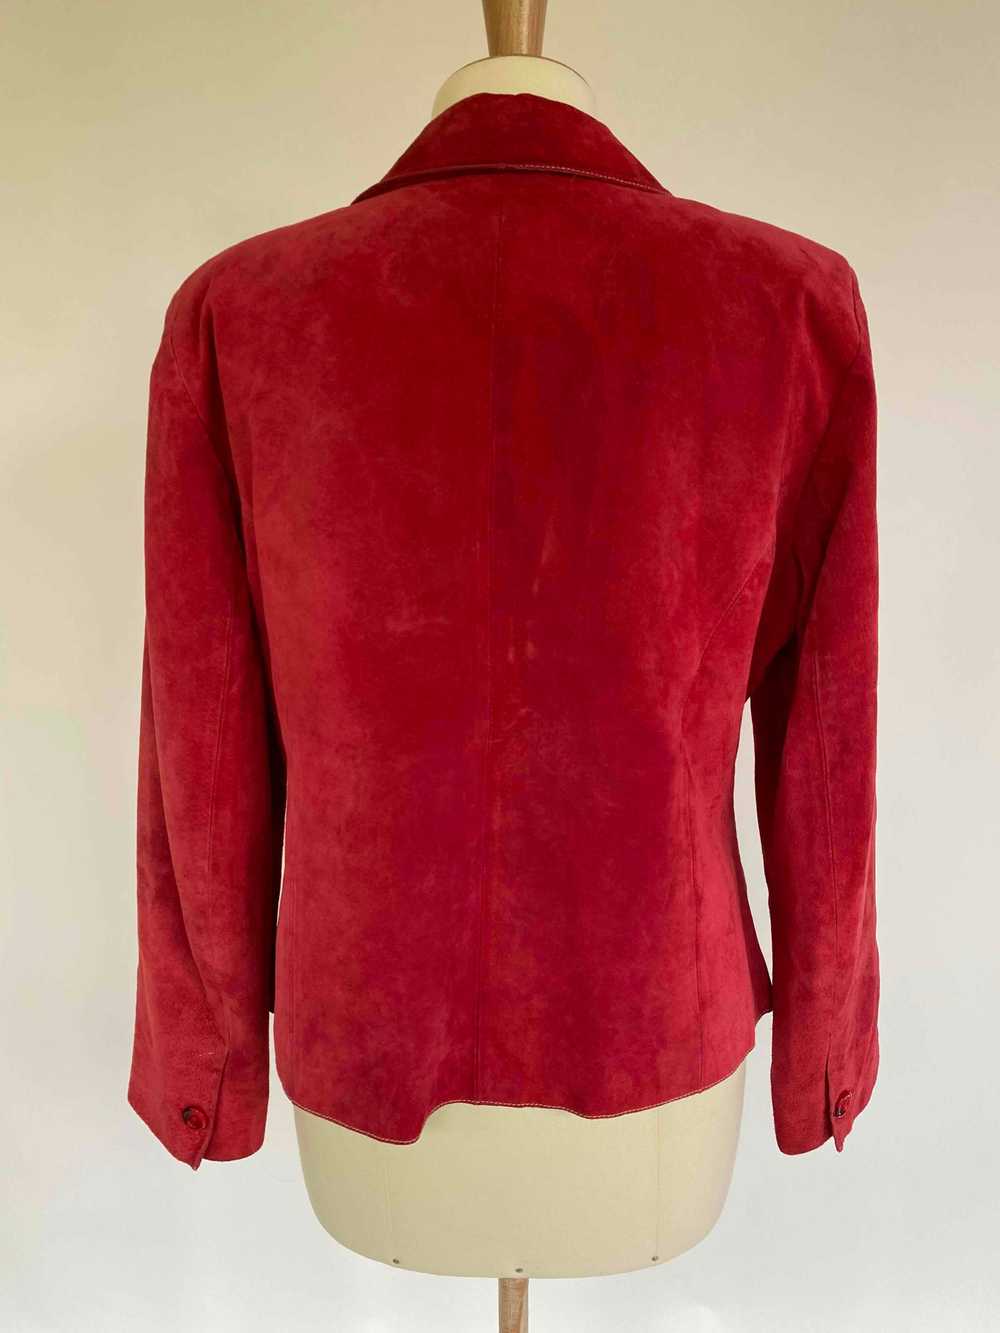 Suede jacket - Red suede jacket (100% pork rind),… - image 4